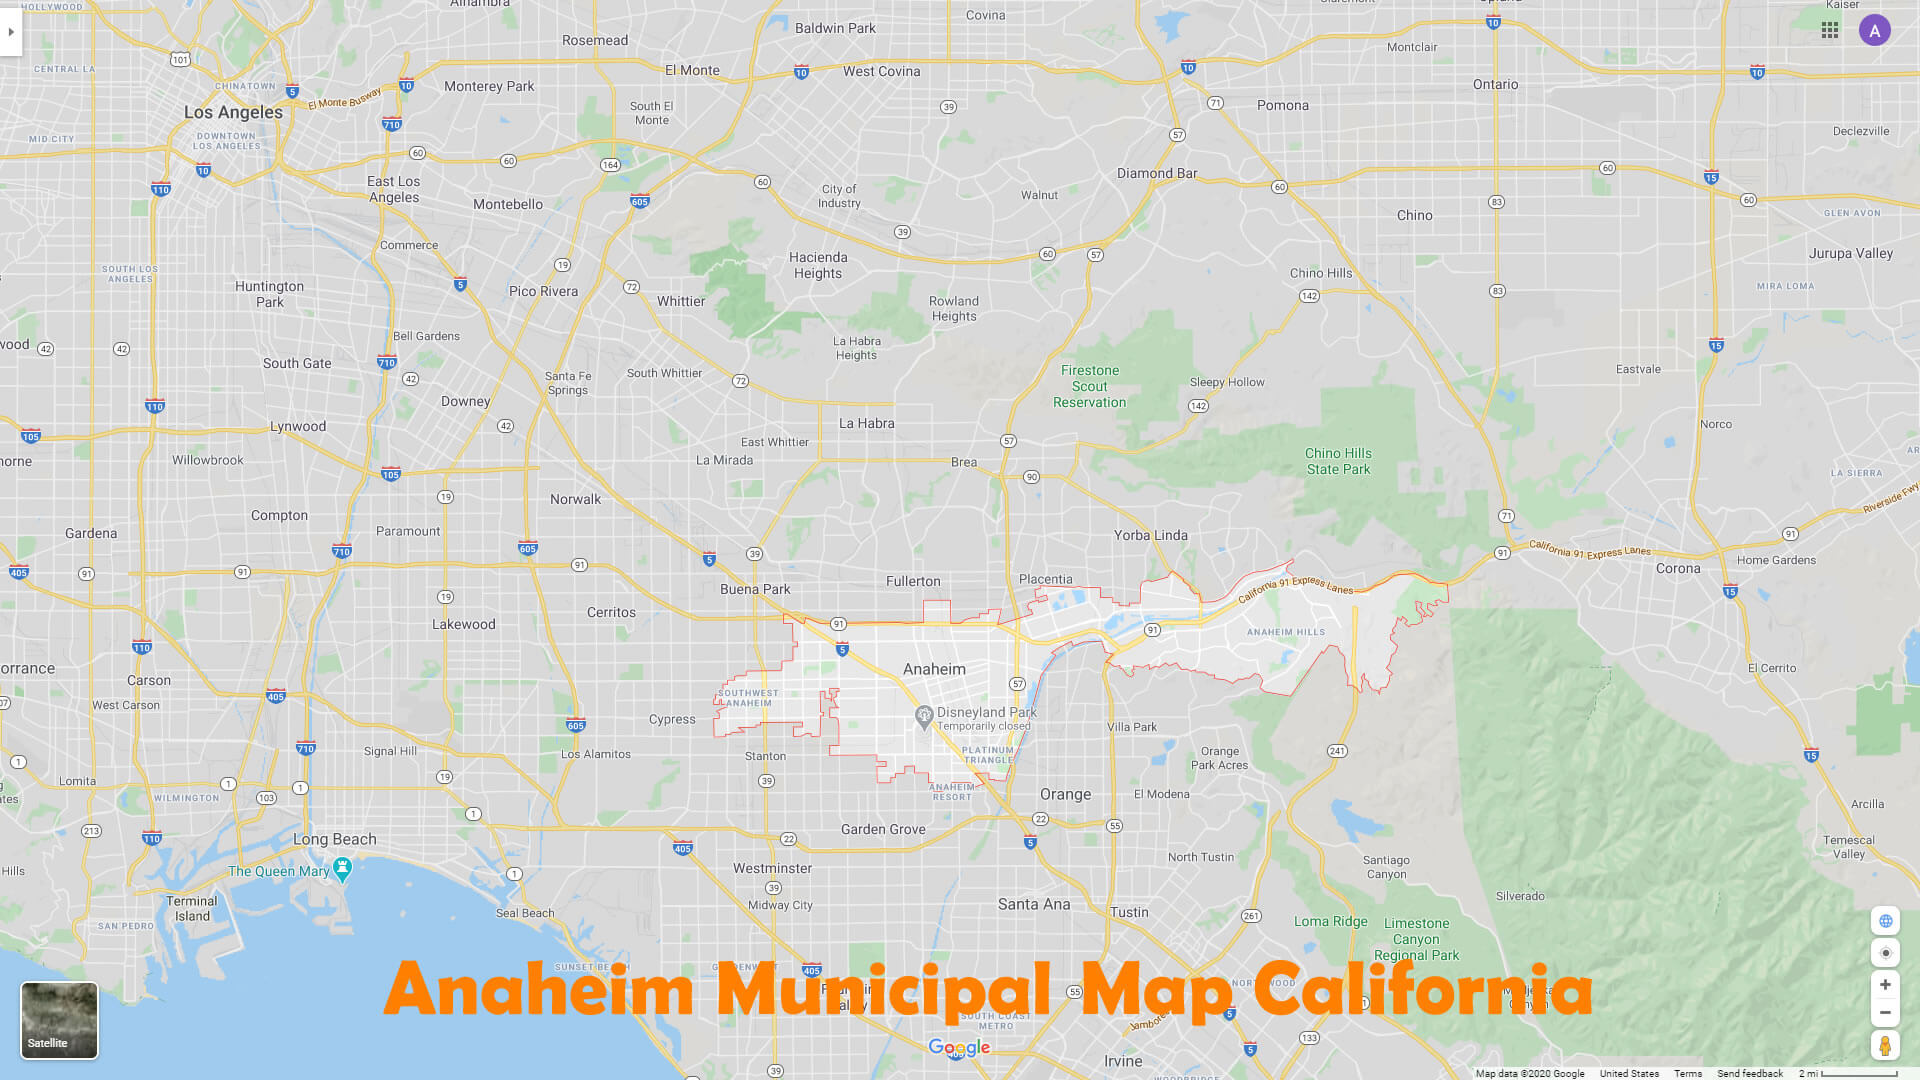 Anaheim Municipal Map California